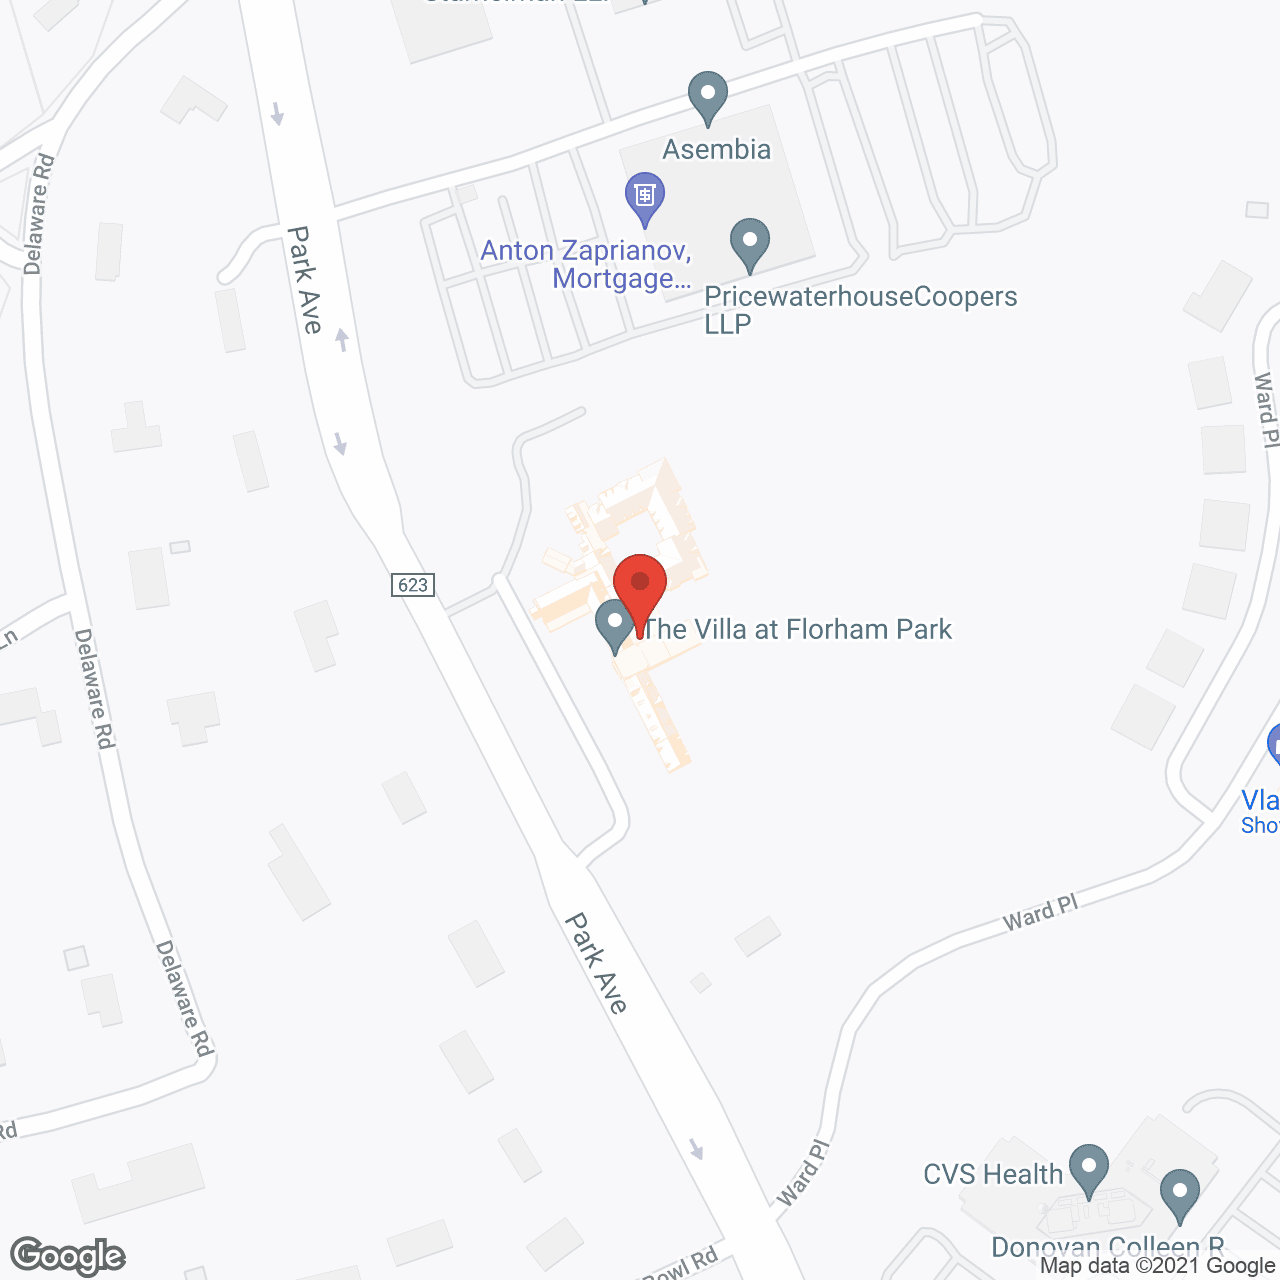 The Villa at Florham Park in google map